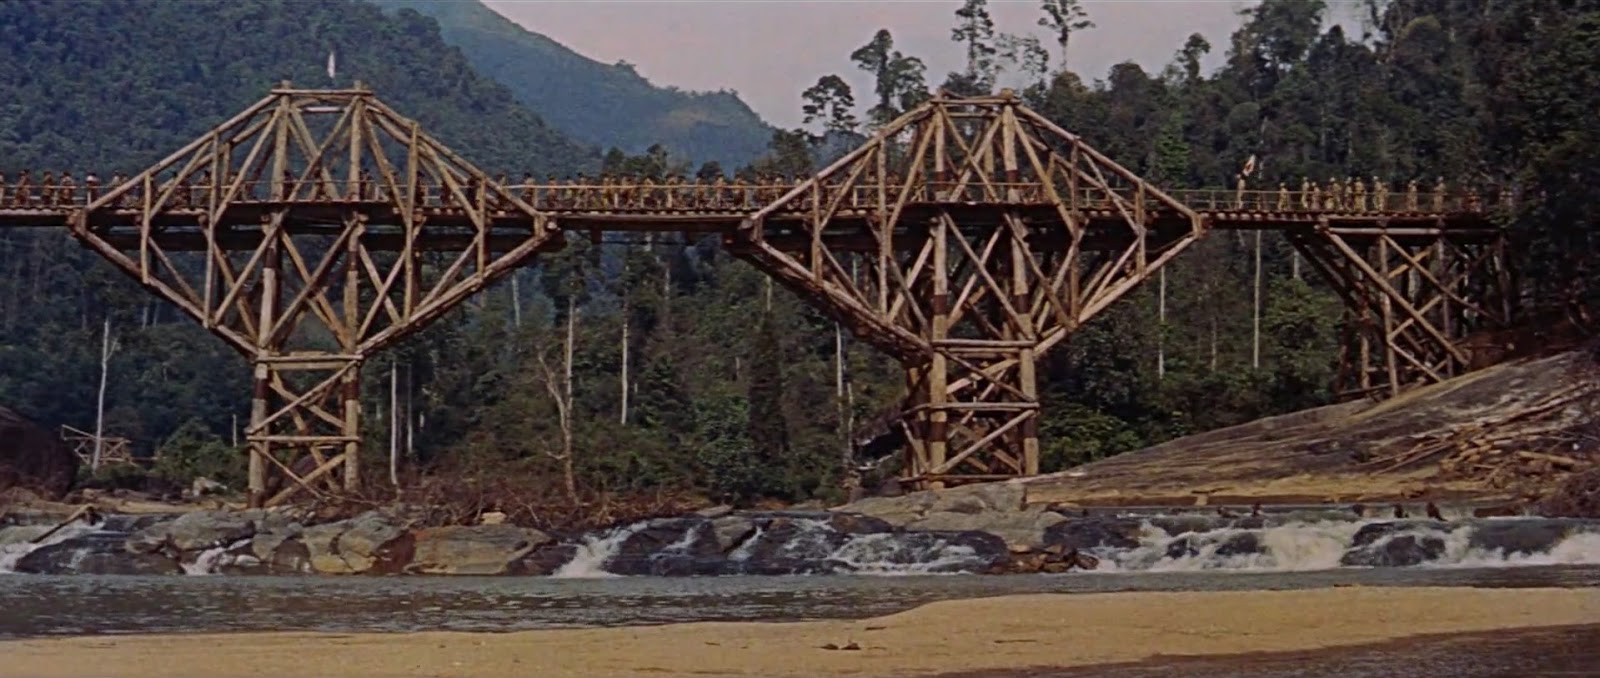 The Bridge On The River Kwai 4